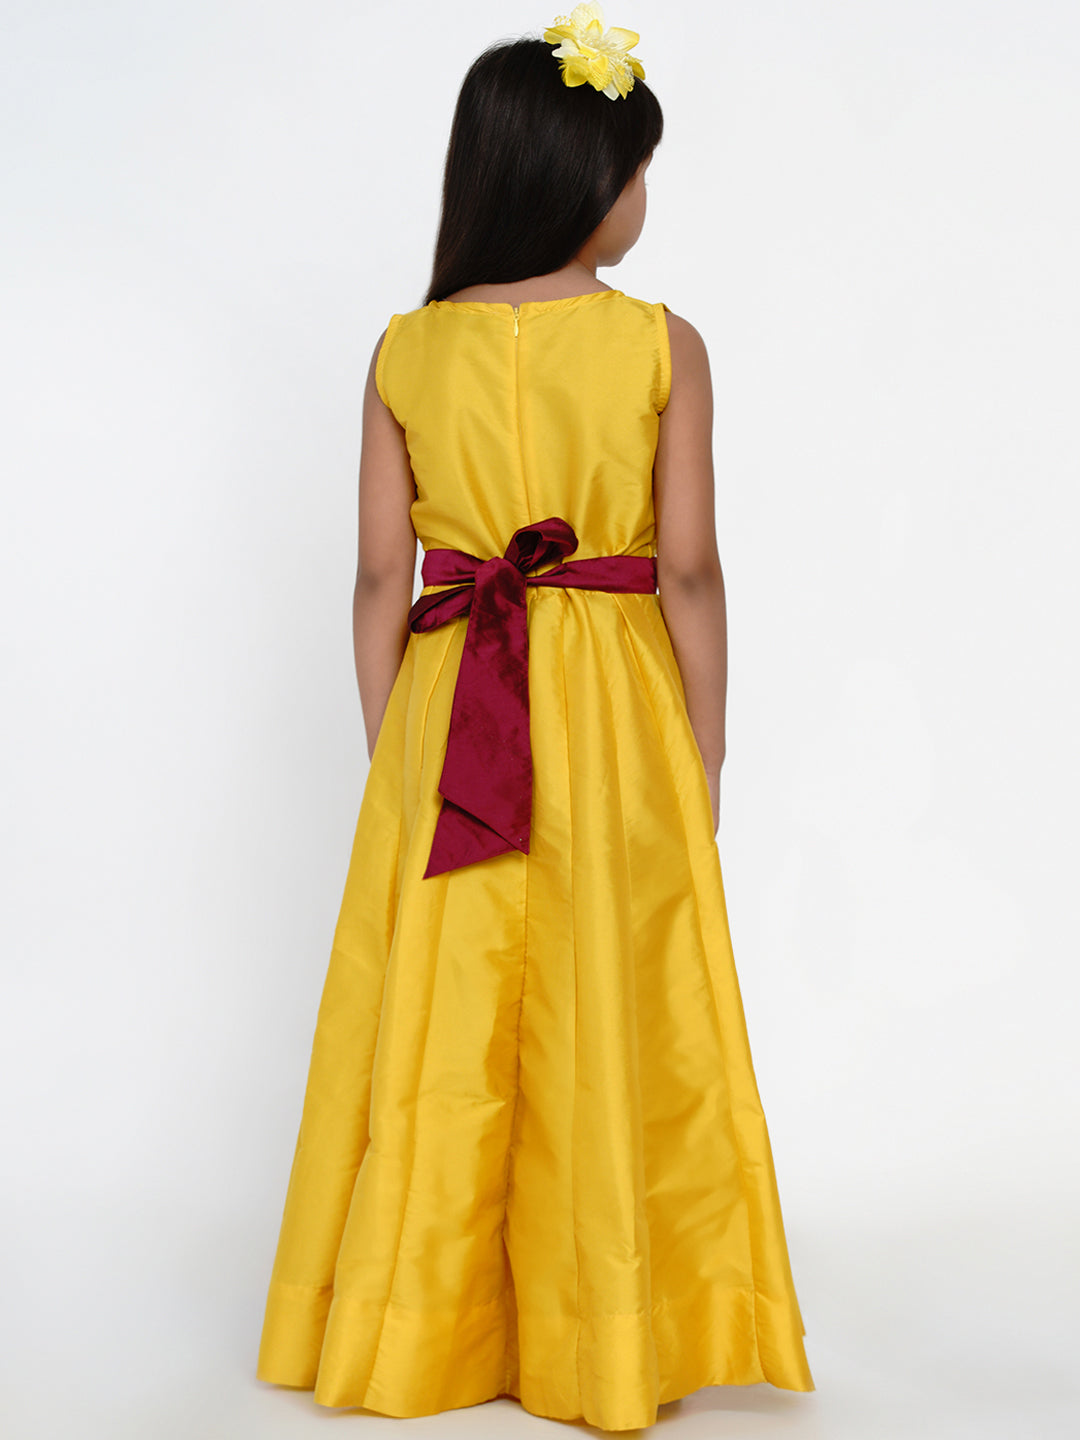 Bitiya By Bhama Yellow Embroidered Dress